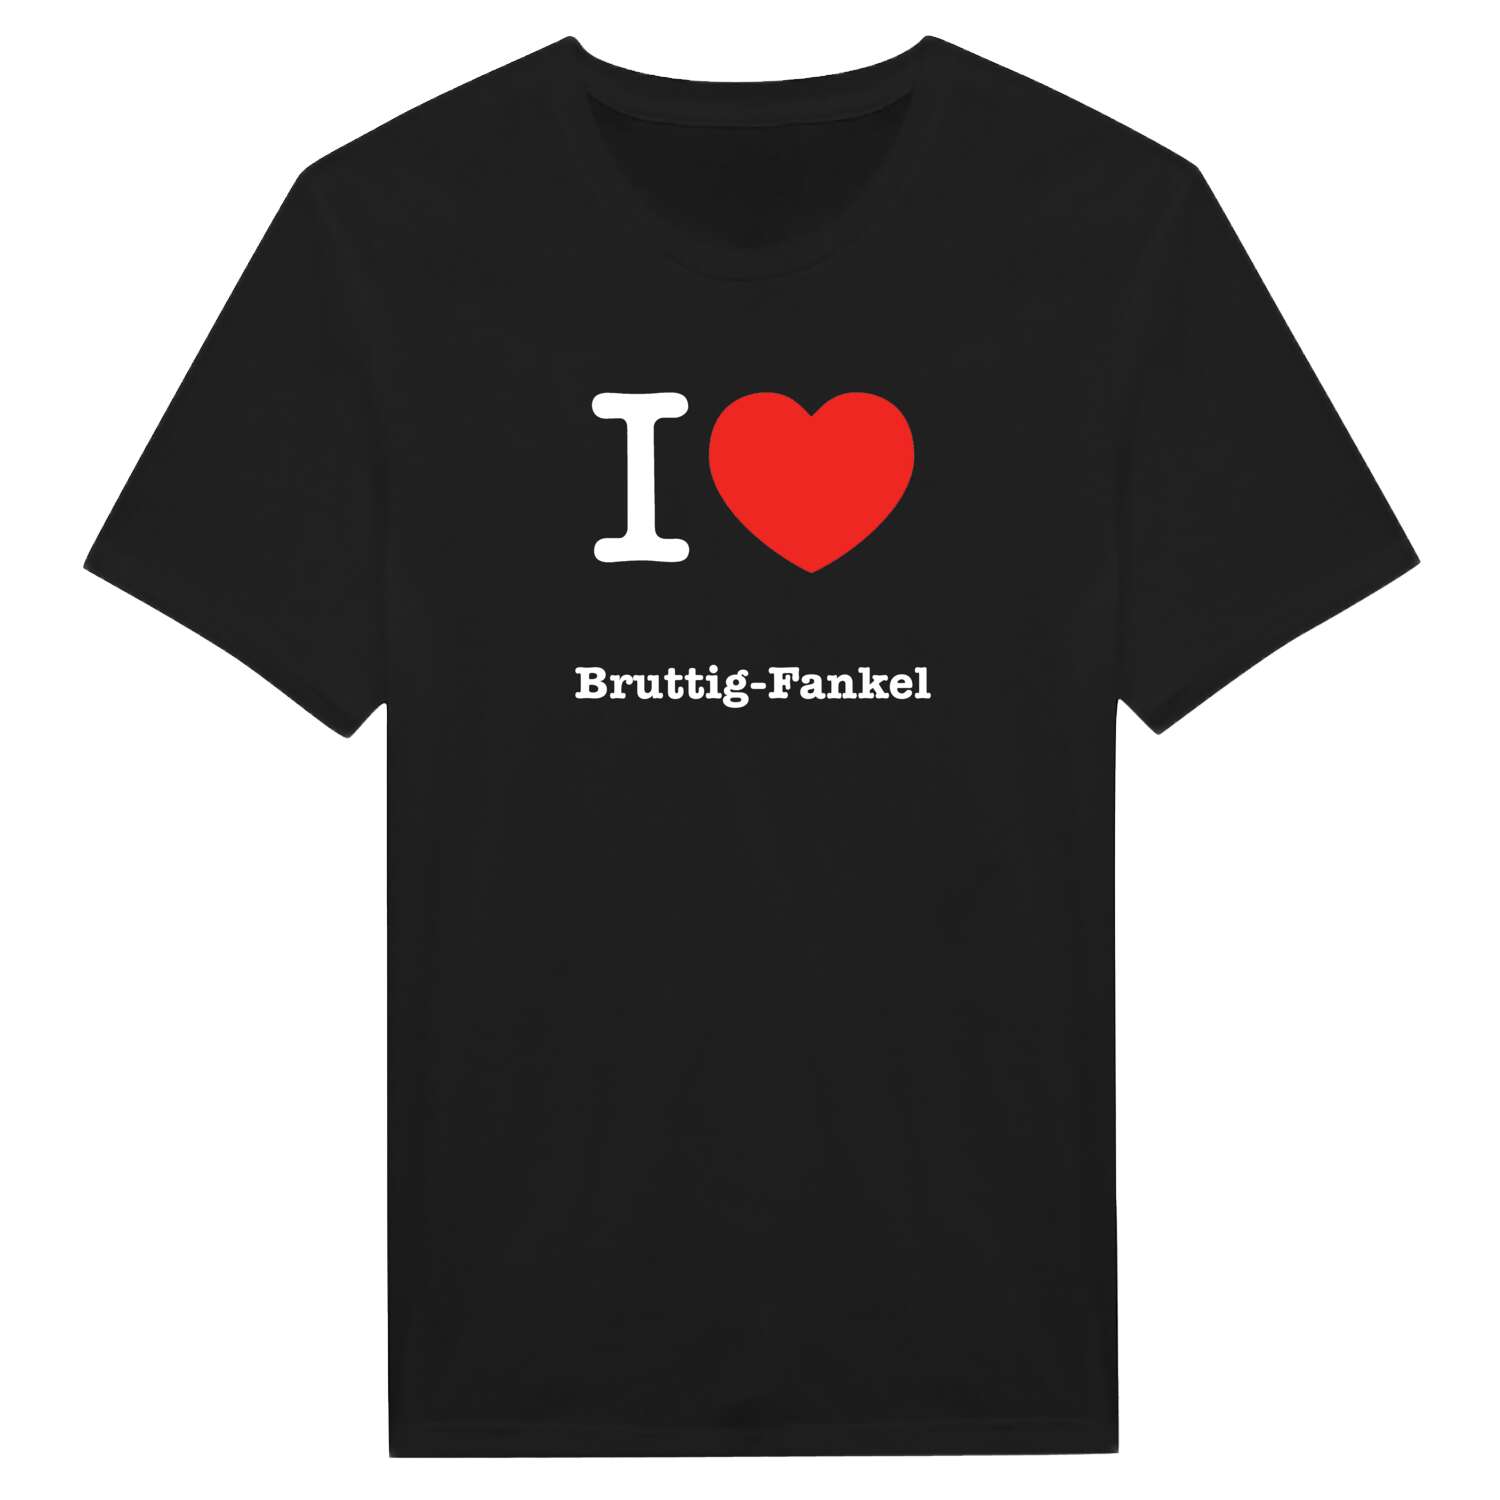 Bruttig-Fankel T-Shirt »I love«